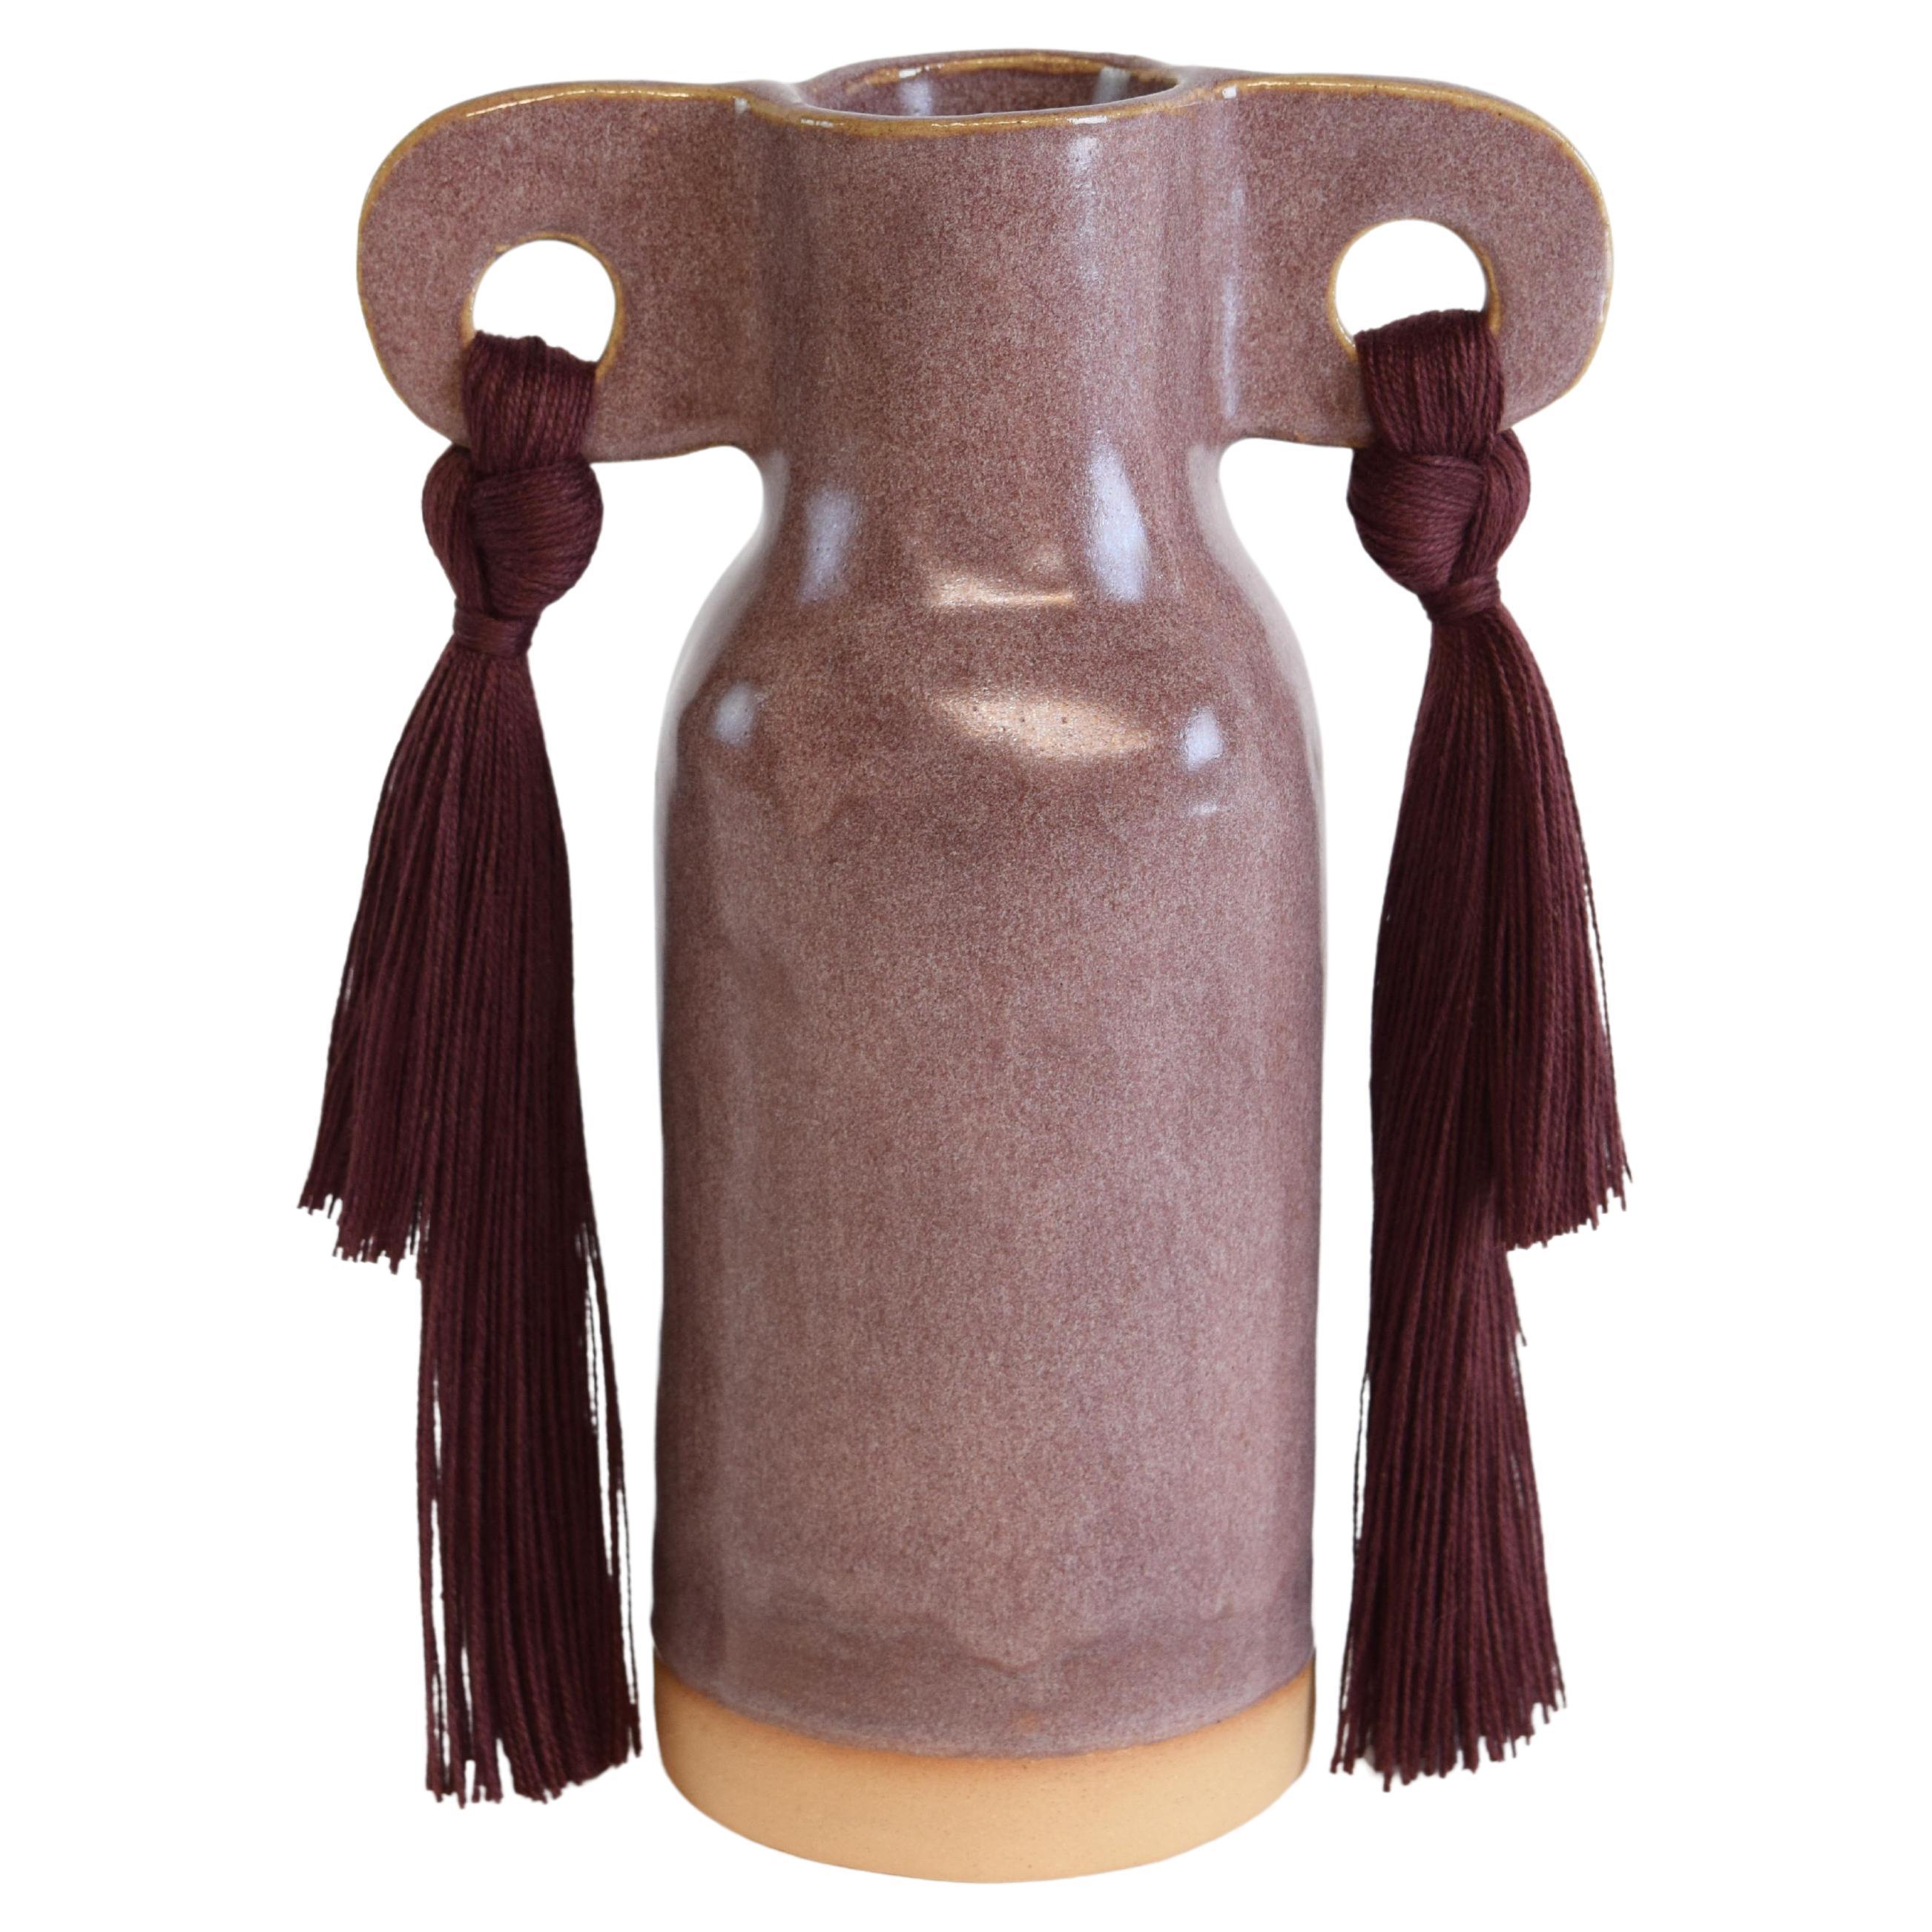 Handmade Ceramic Vase #606 in Light Burgundy Glaze with Tencel Fringe Details For Sale